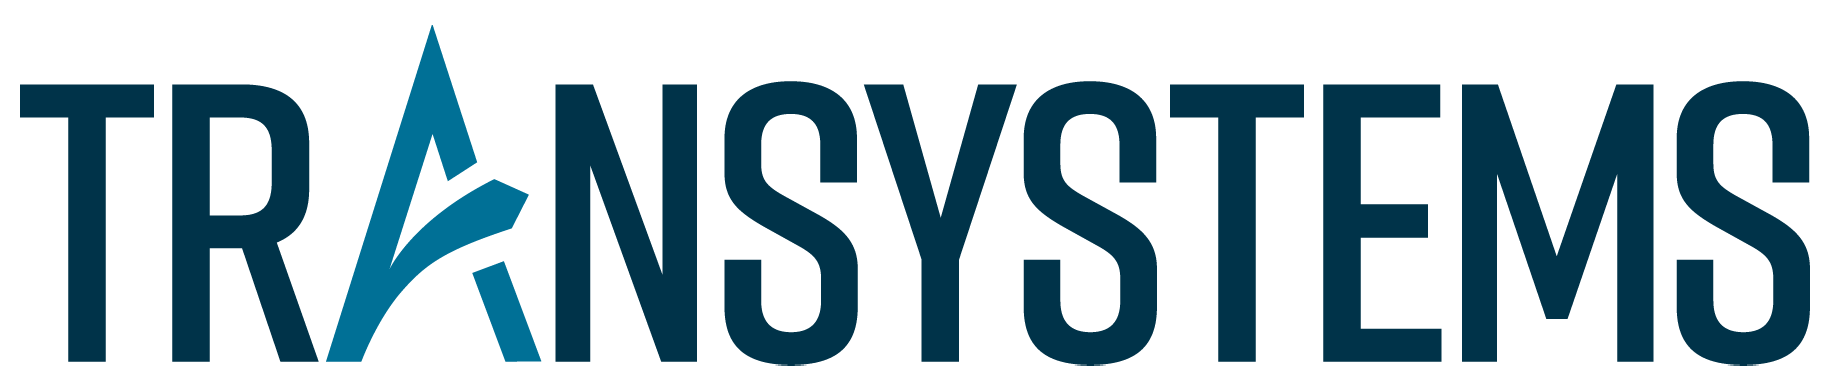 TransSystems logo